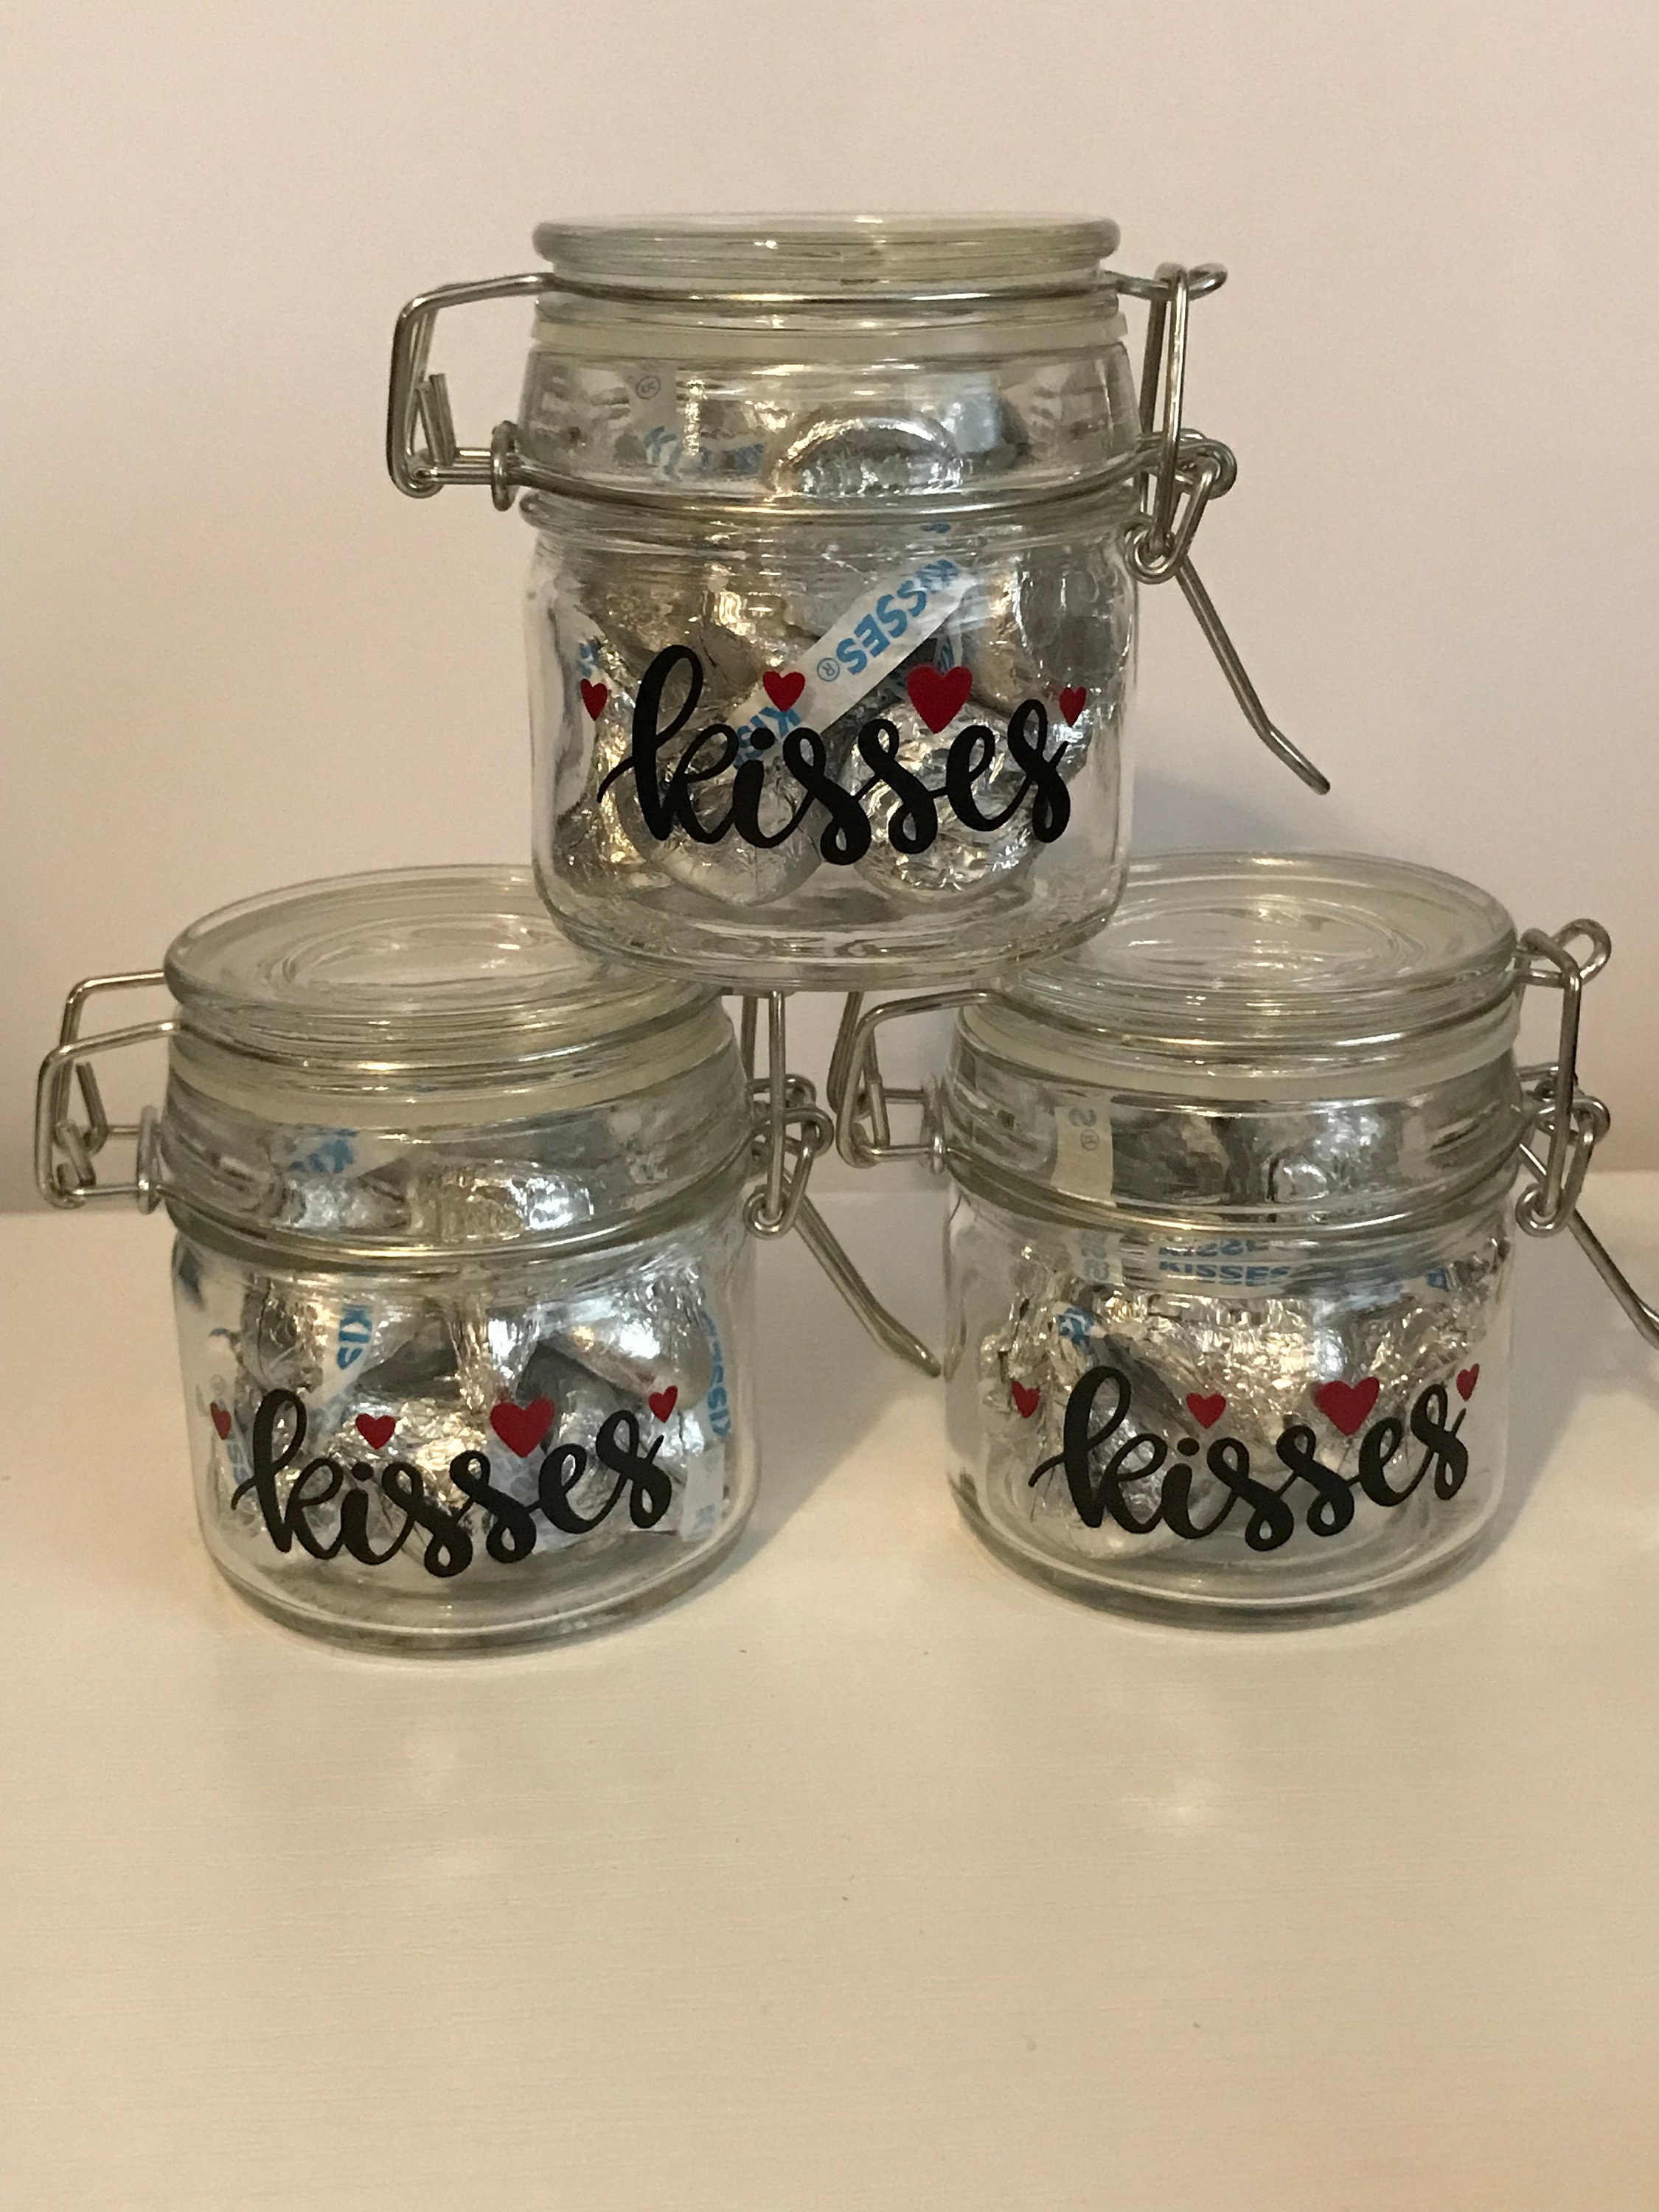 Ceramic Mason Cookie Jar Farmhouse Kitchen Decor - Utensil Holder - Cookie Jars with Lids - Vintage Cookie Container - Candy Jars with Lids - Flour